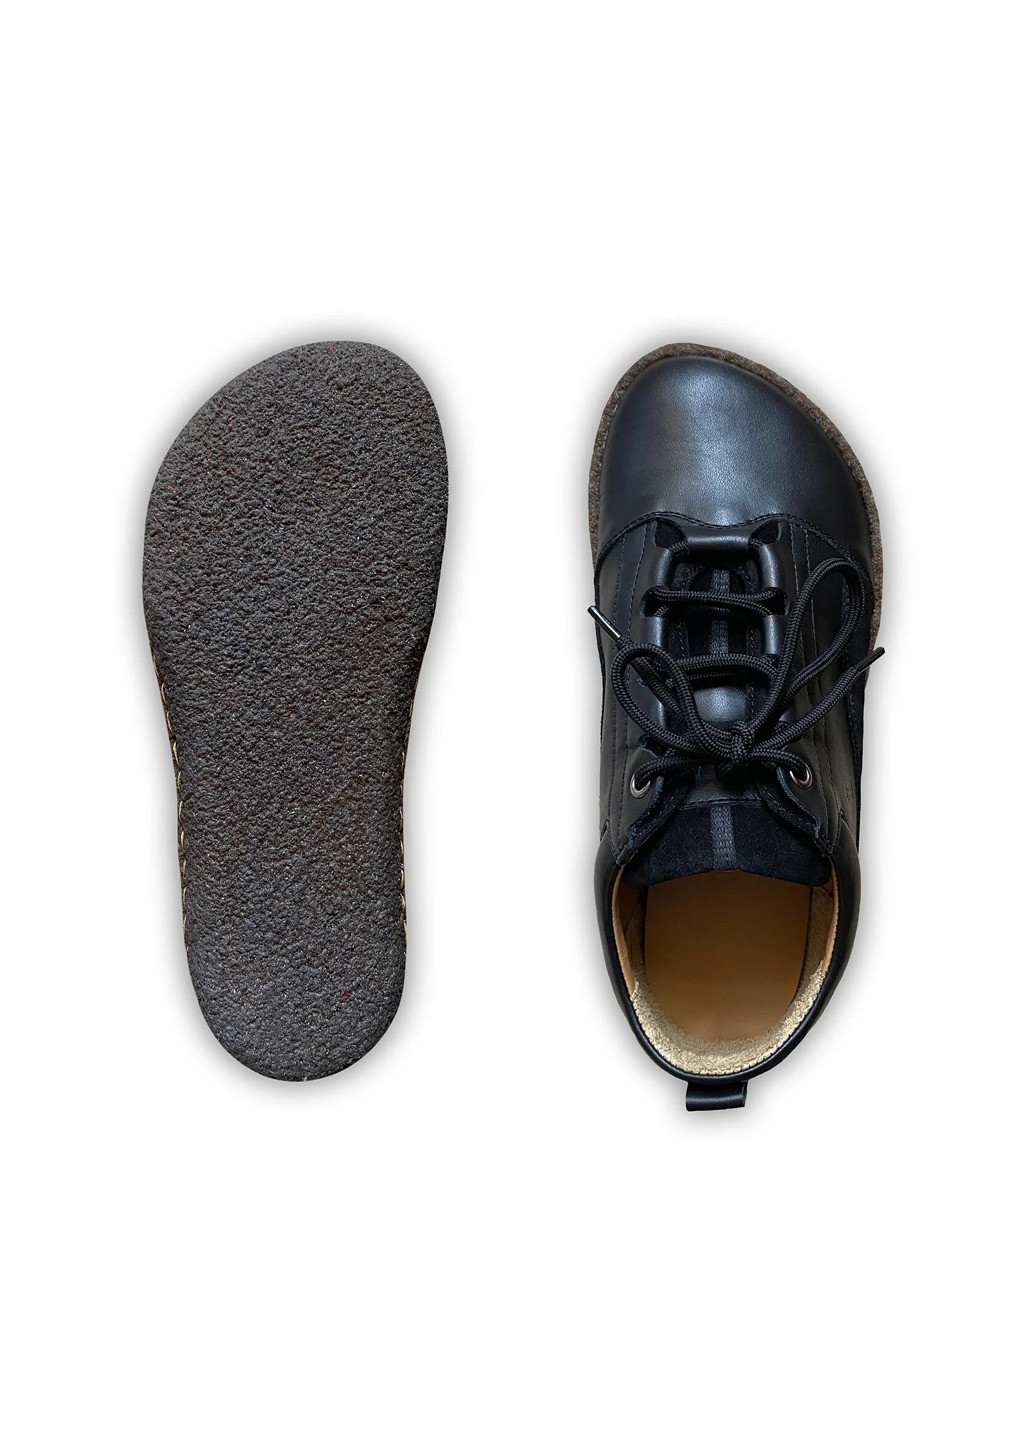 Черные кожаные полукеды, босо-обувь БОСІ Беглі